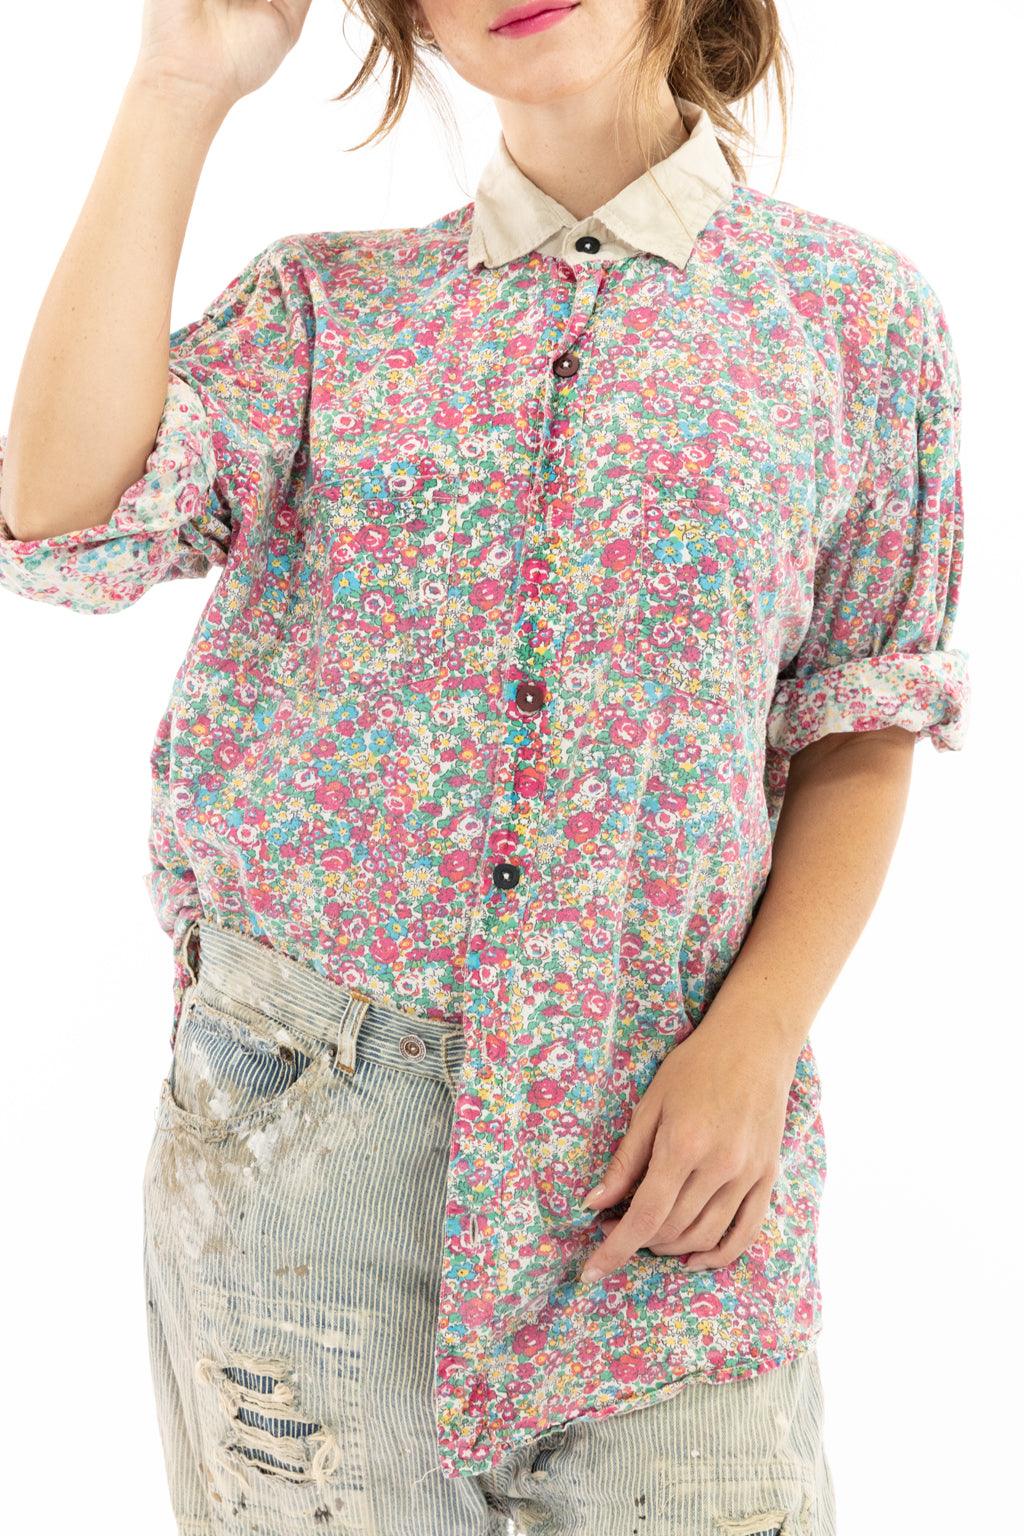 Boyfriend Shirt - Magnolia Pearl Clothing